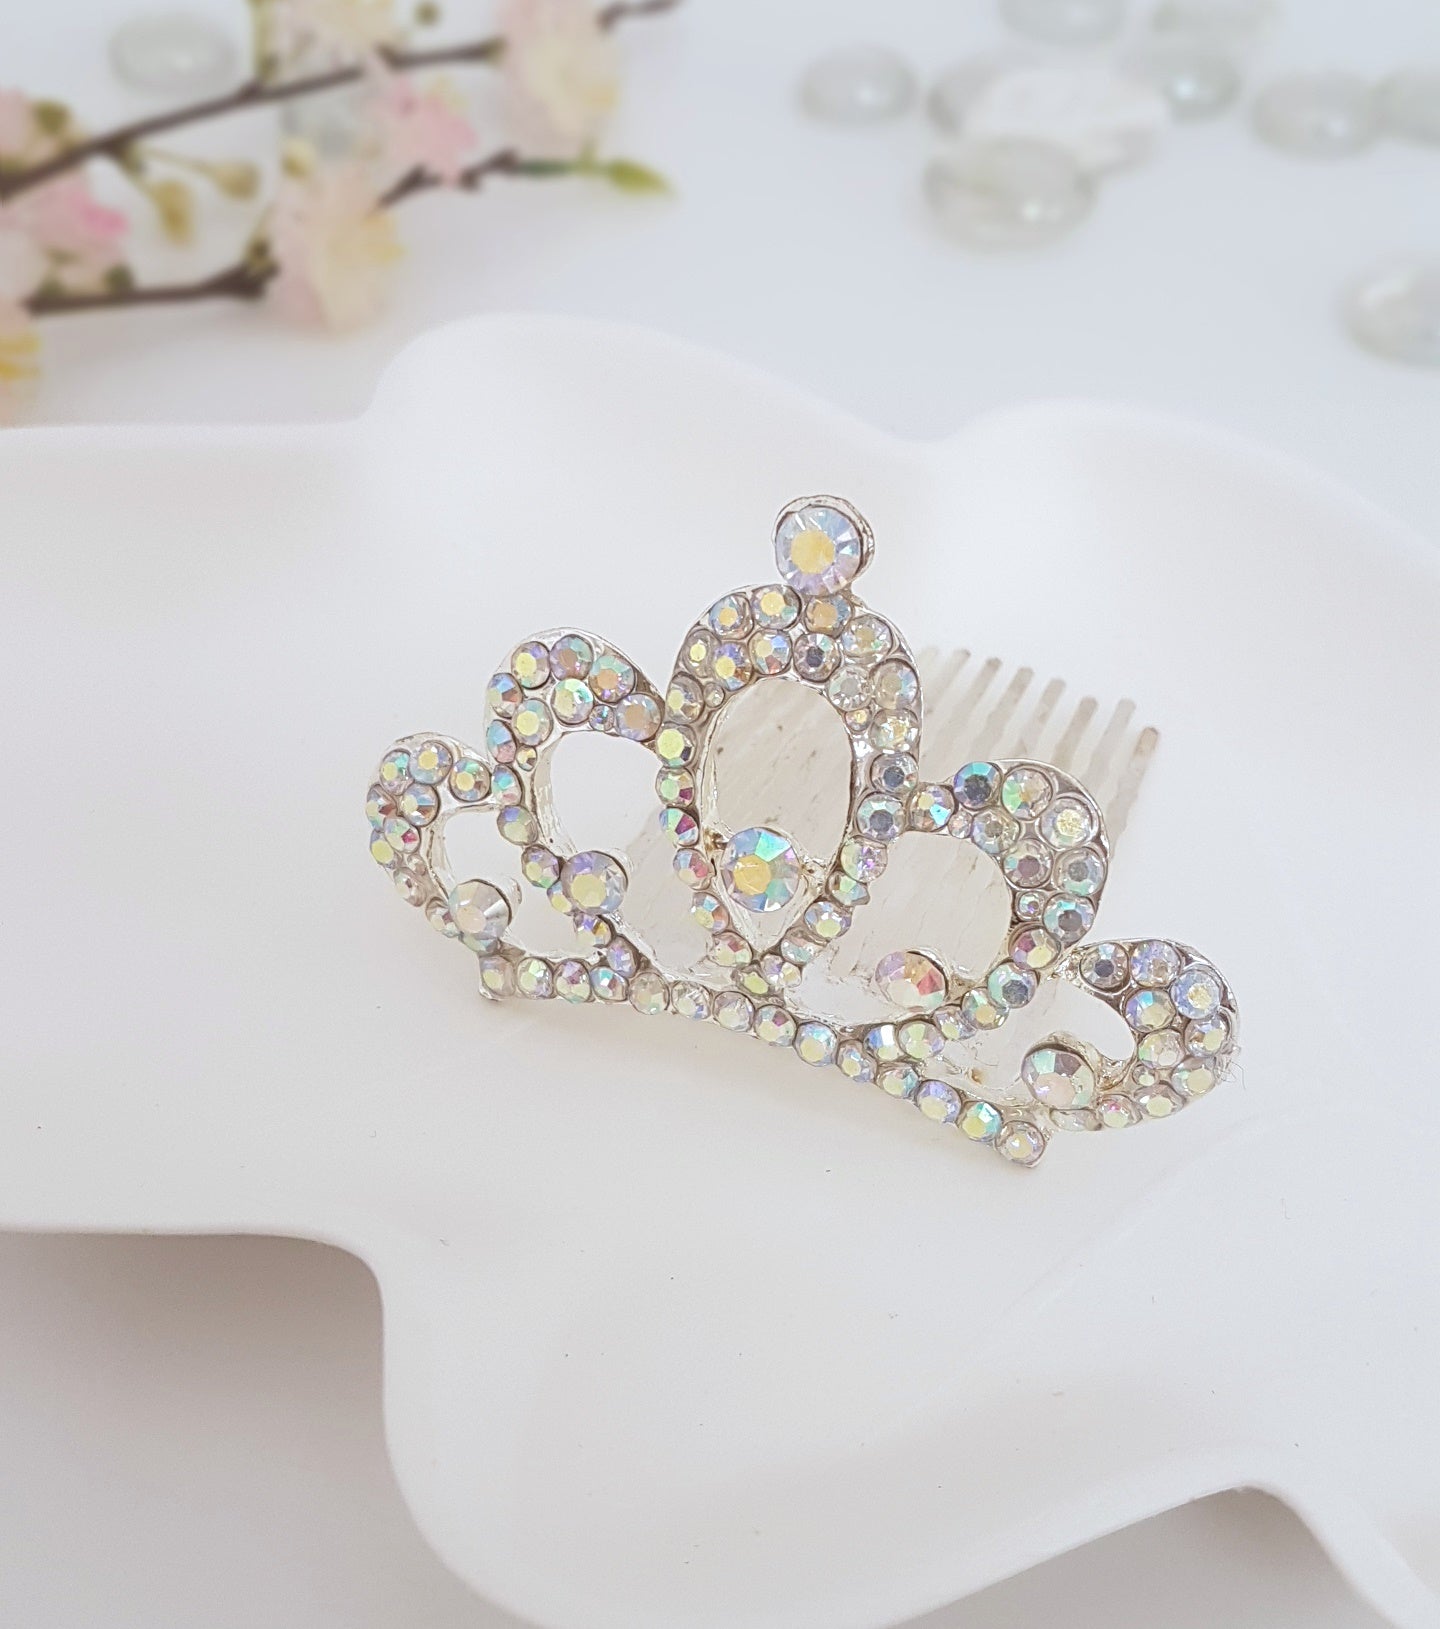 Mini Crown Tiara with AB Crystals